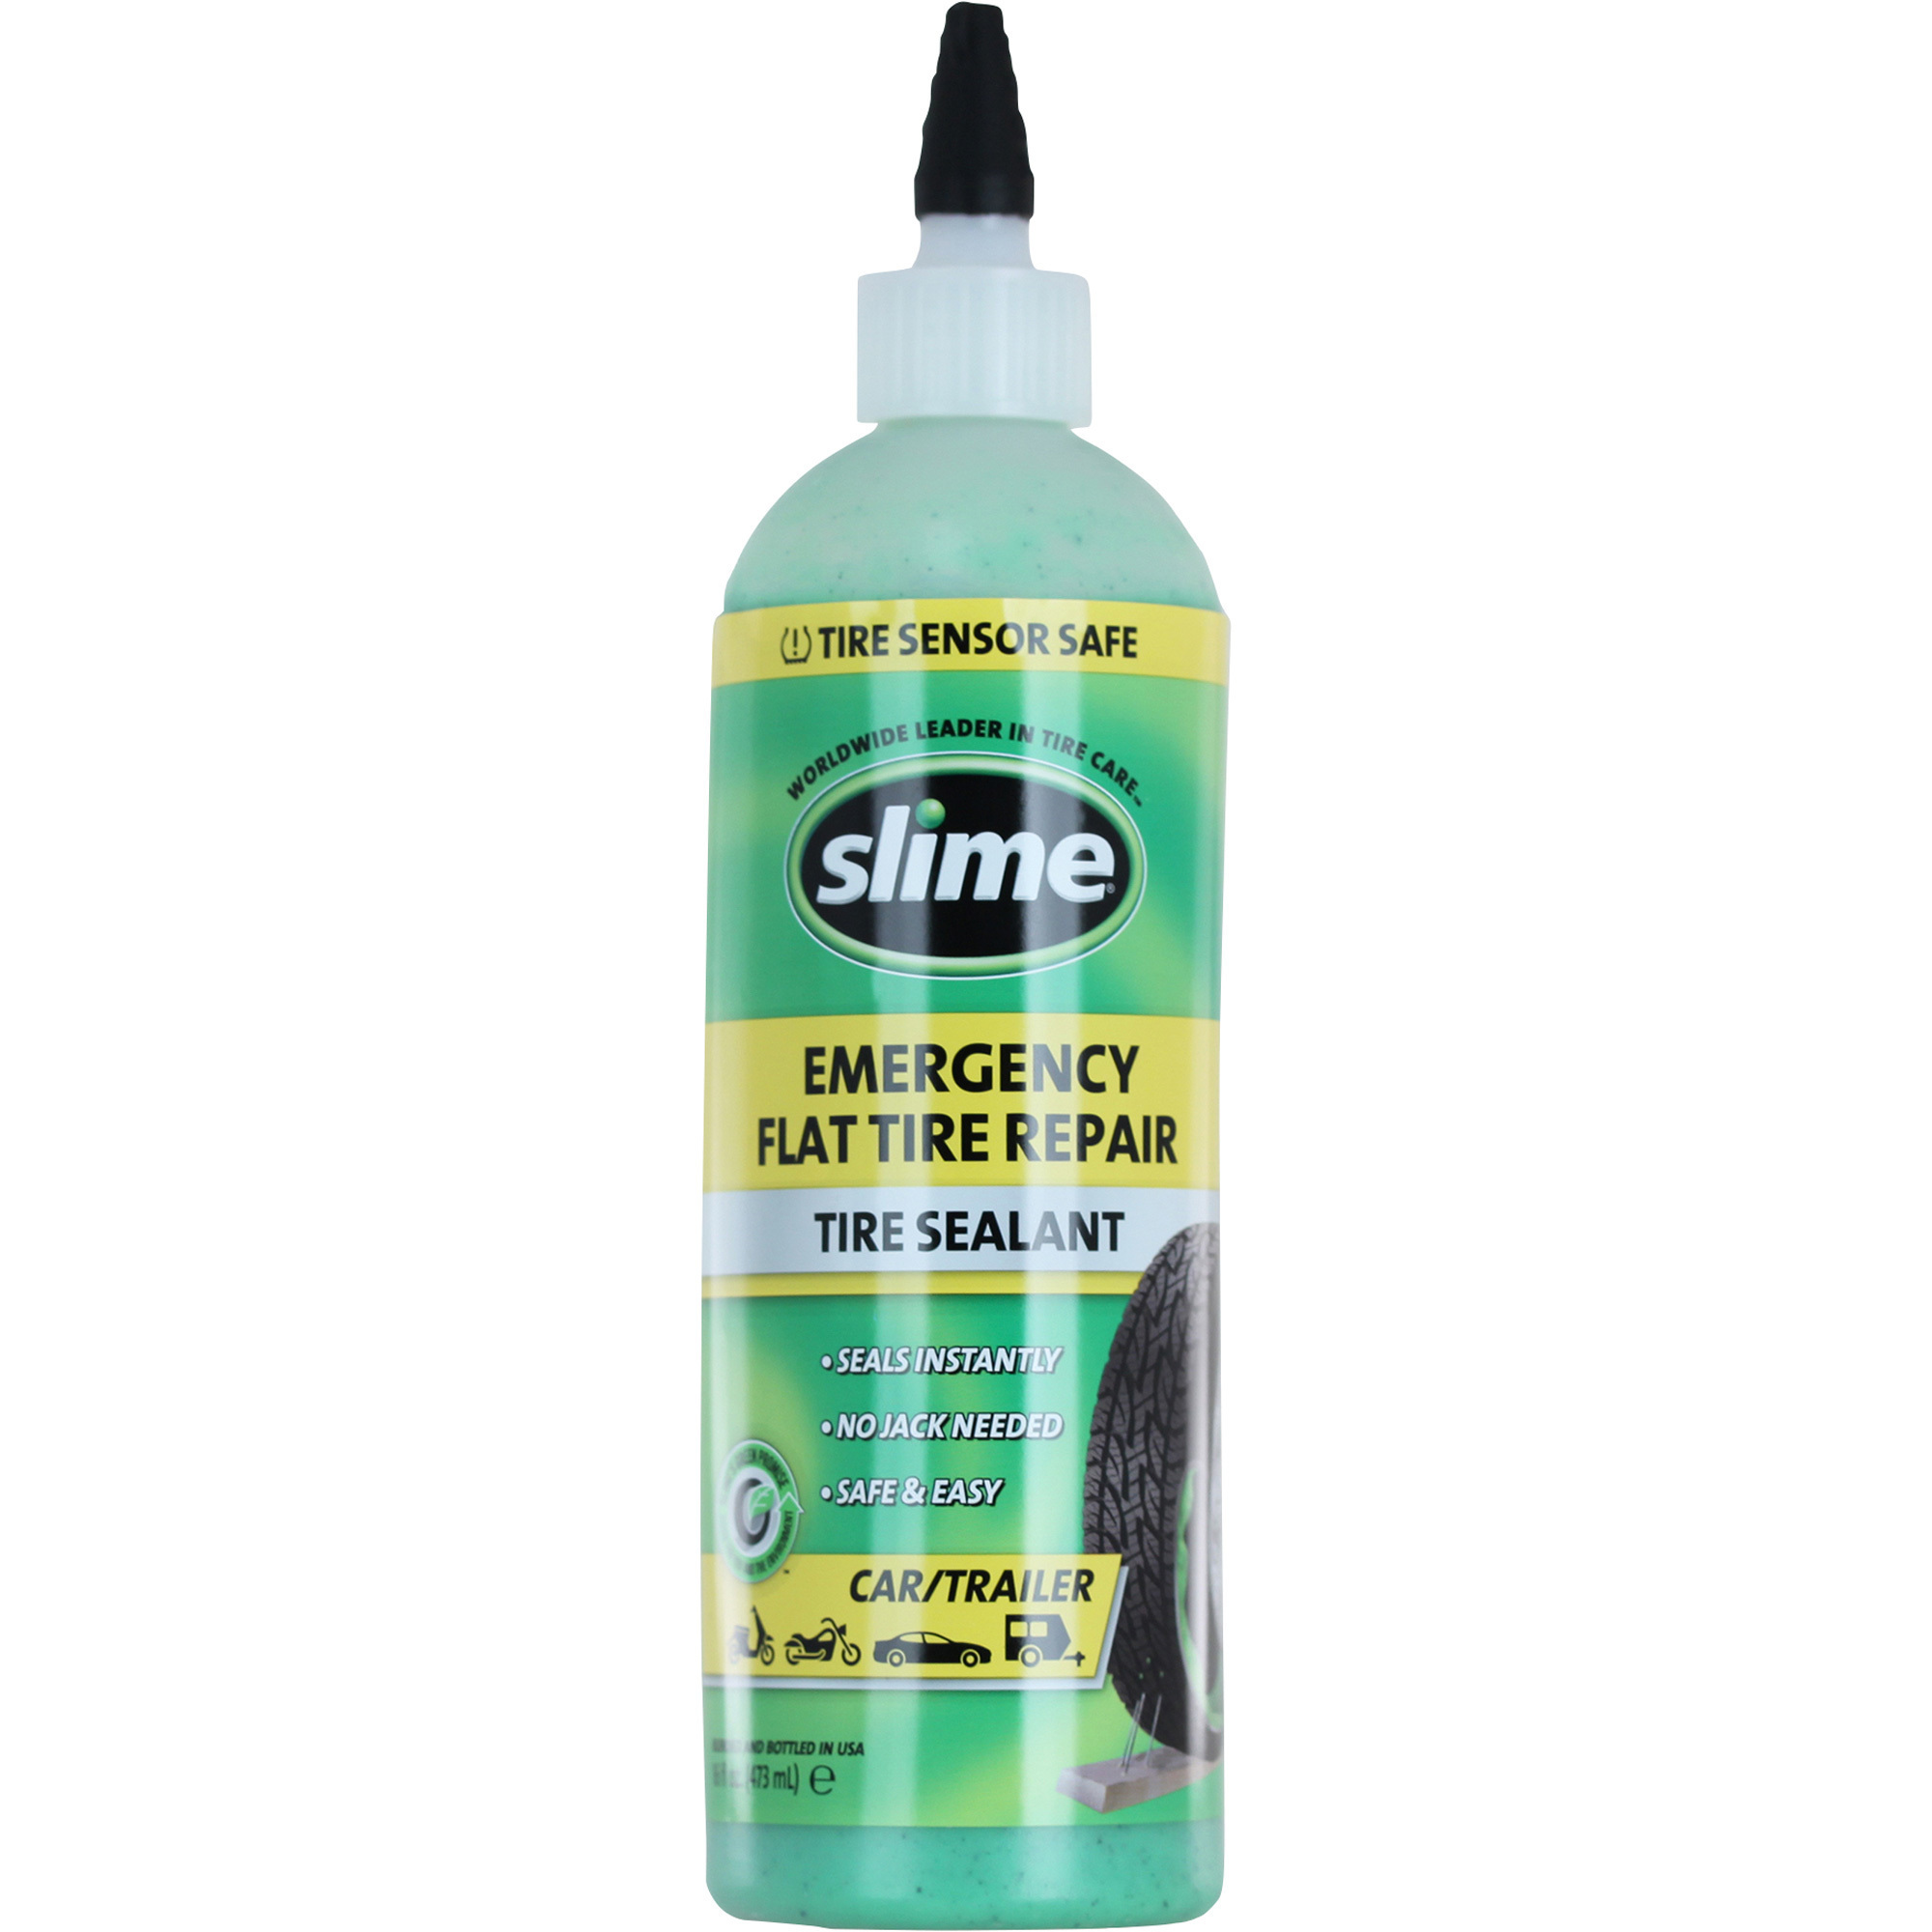 Slime Emergency Tire Sealant, 16 oz. (Car/Trailer)